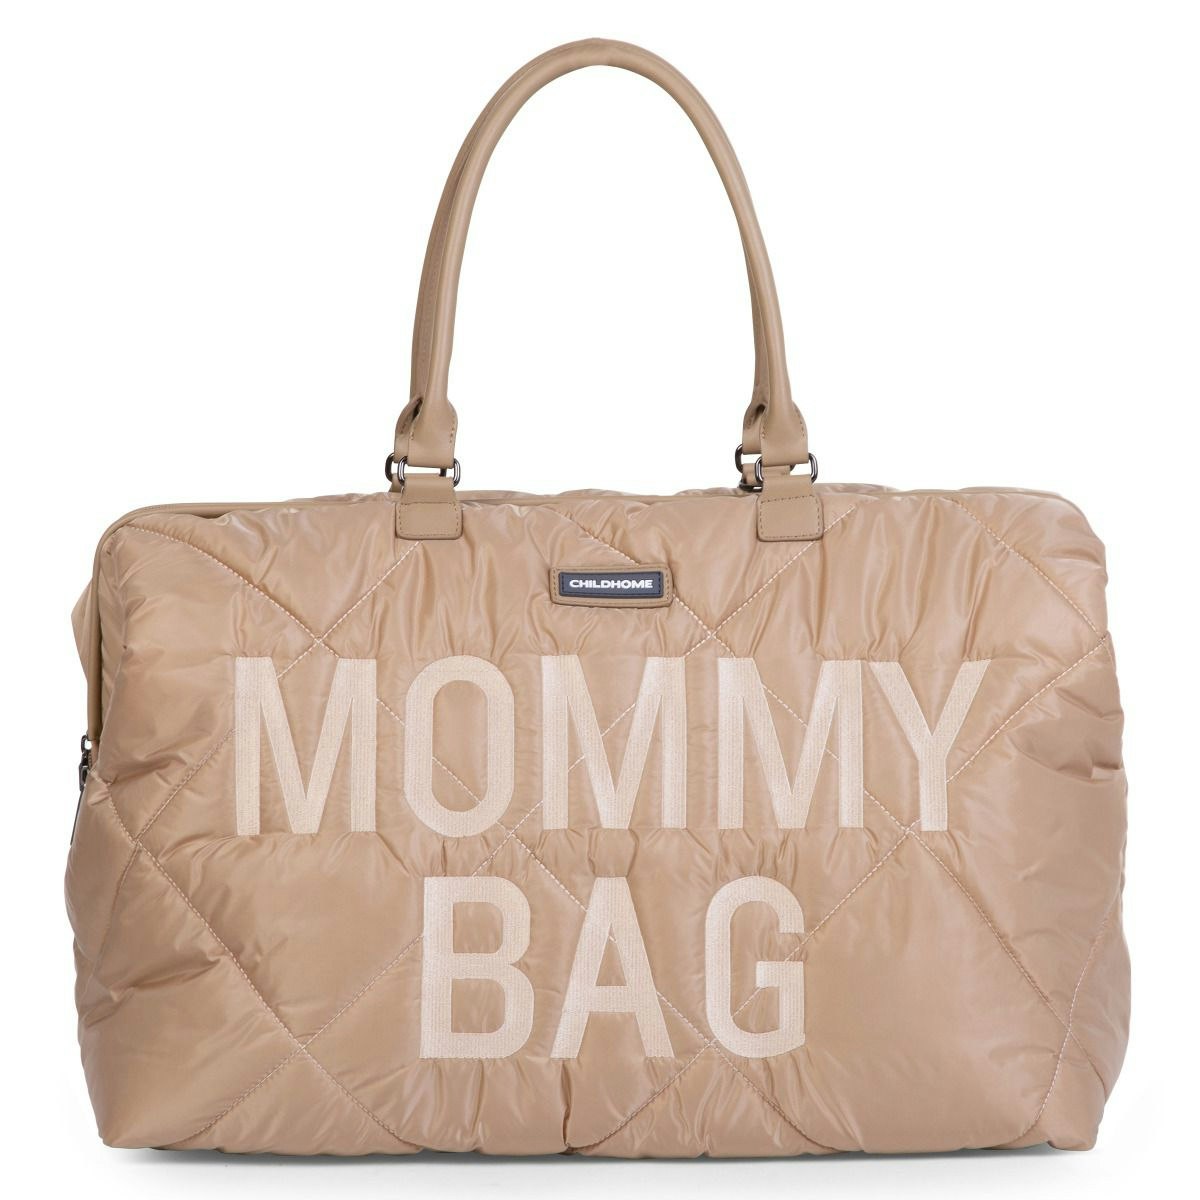 Mommy Bag Nursery Bag - Puffered - Beige - BaBa Baby